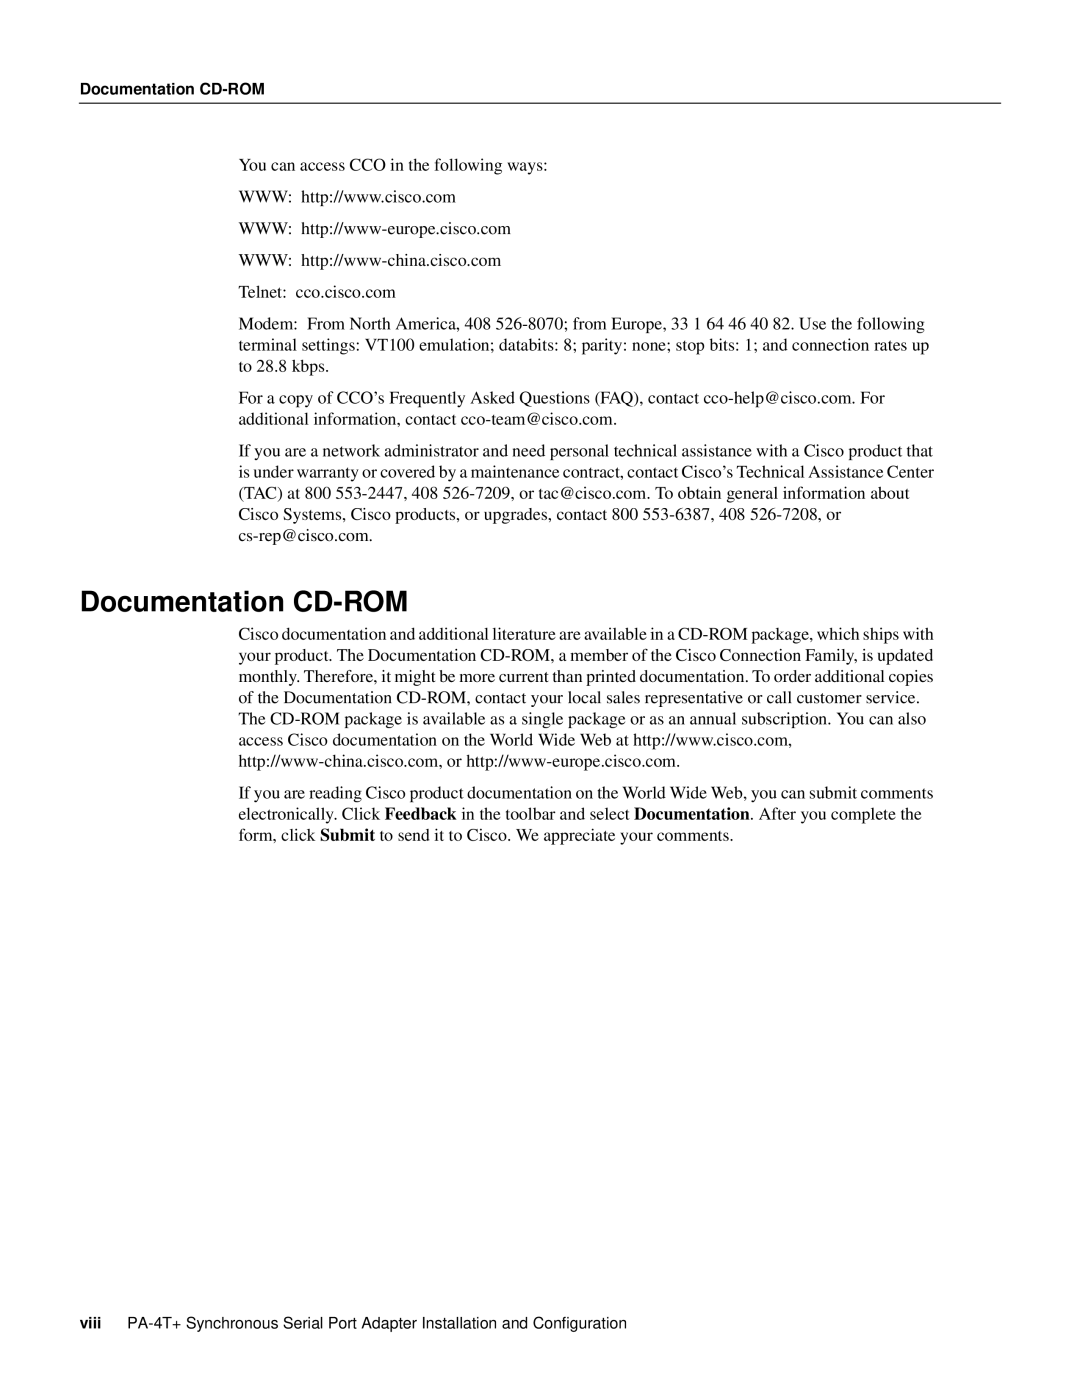 Cisco Systems PA-4T manual Documentation CD-ROM 